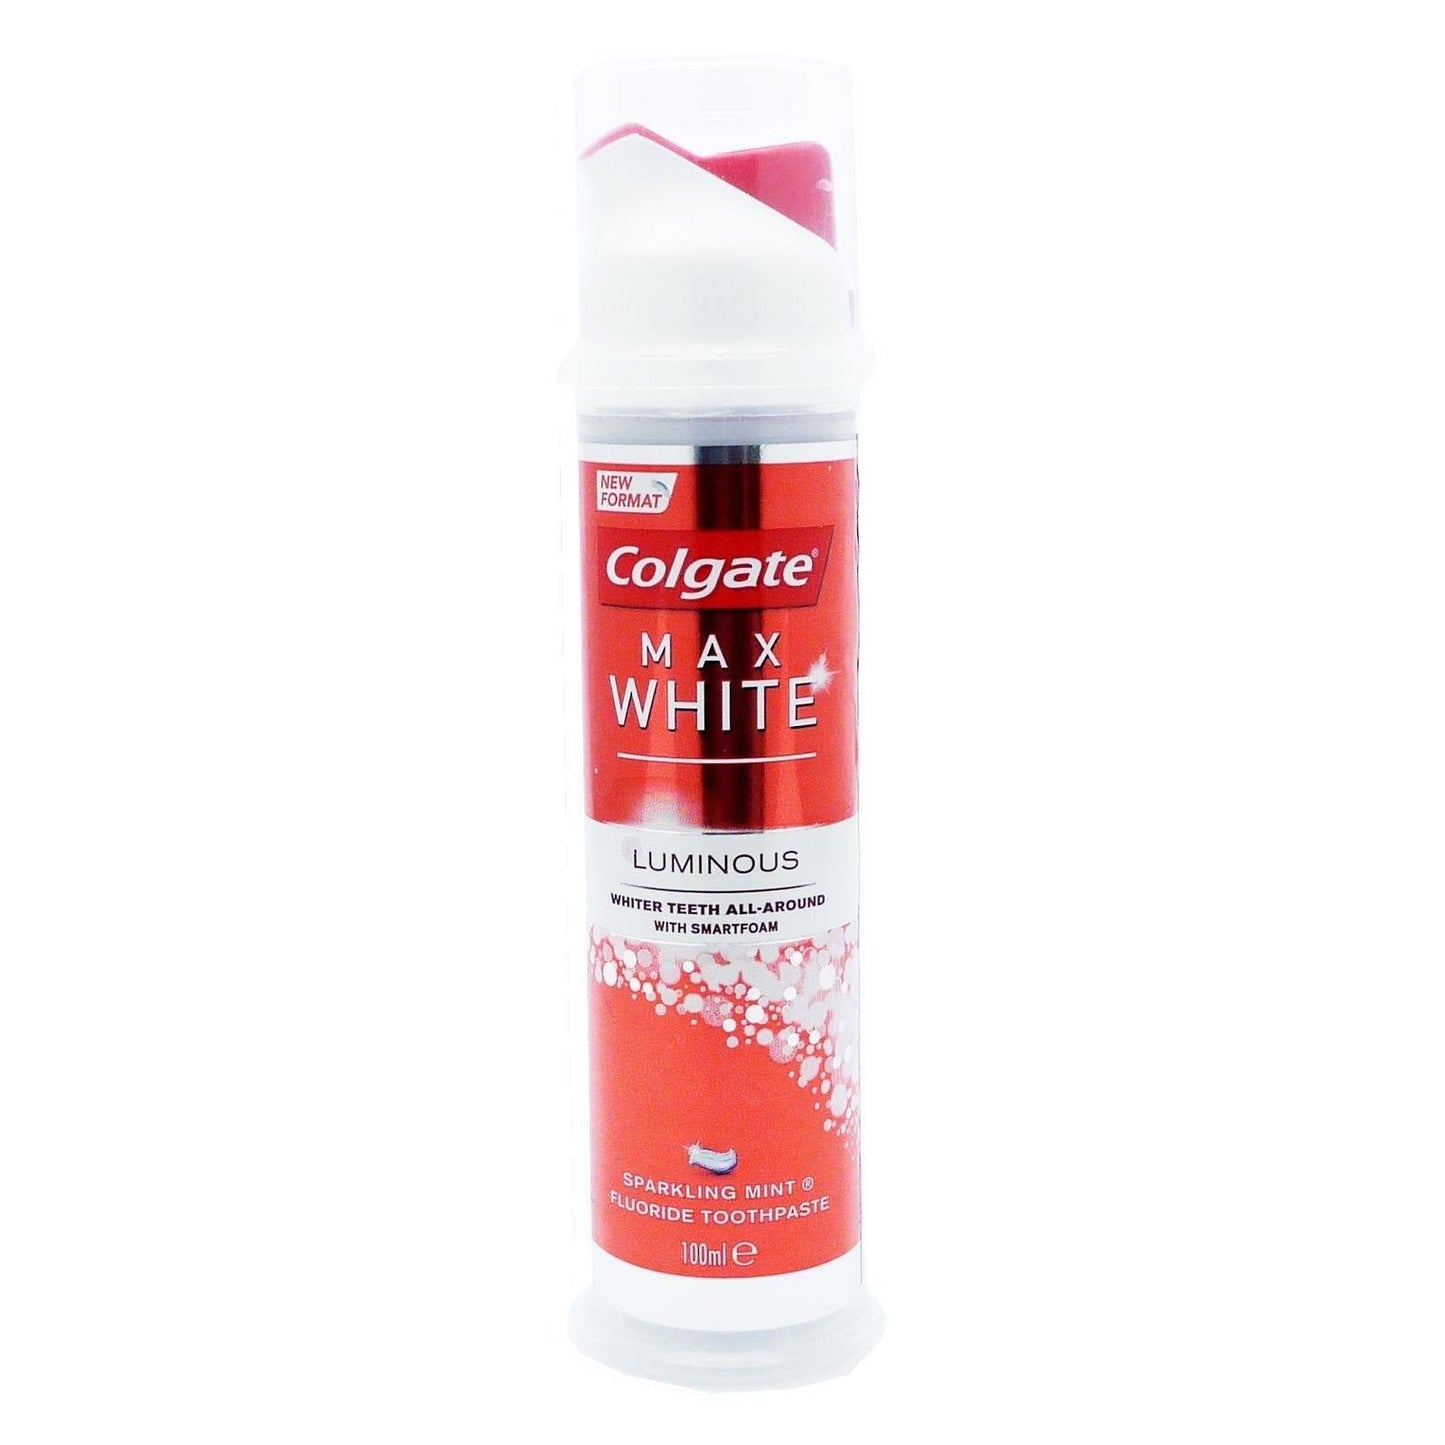 Colgate Max White Luminous Whitening Toothpaste 75ml